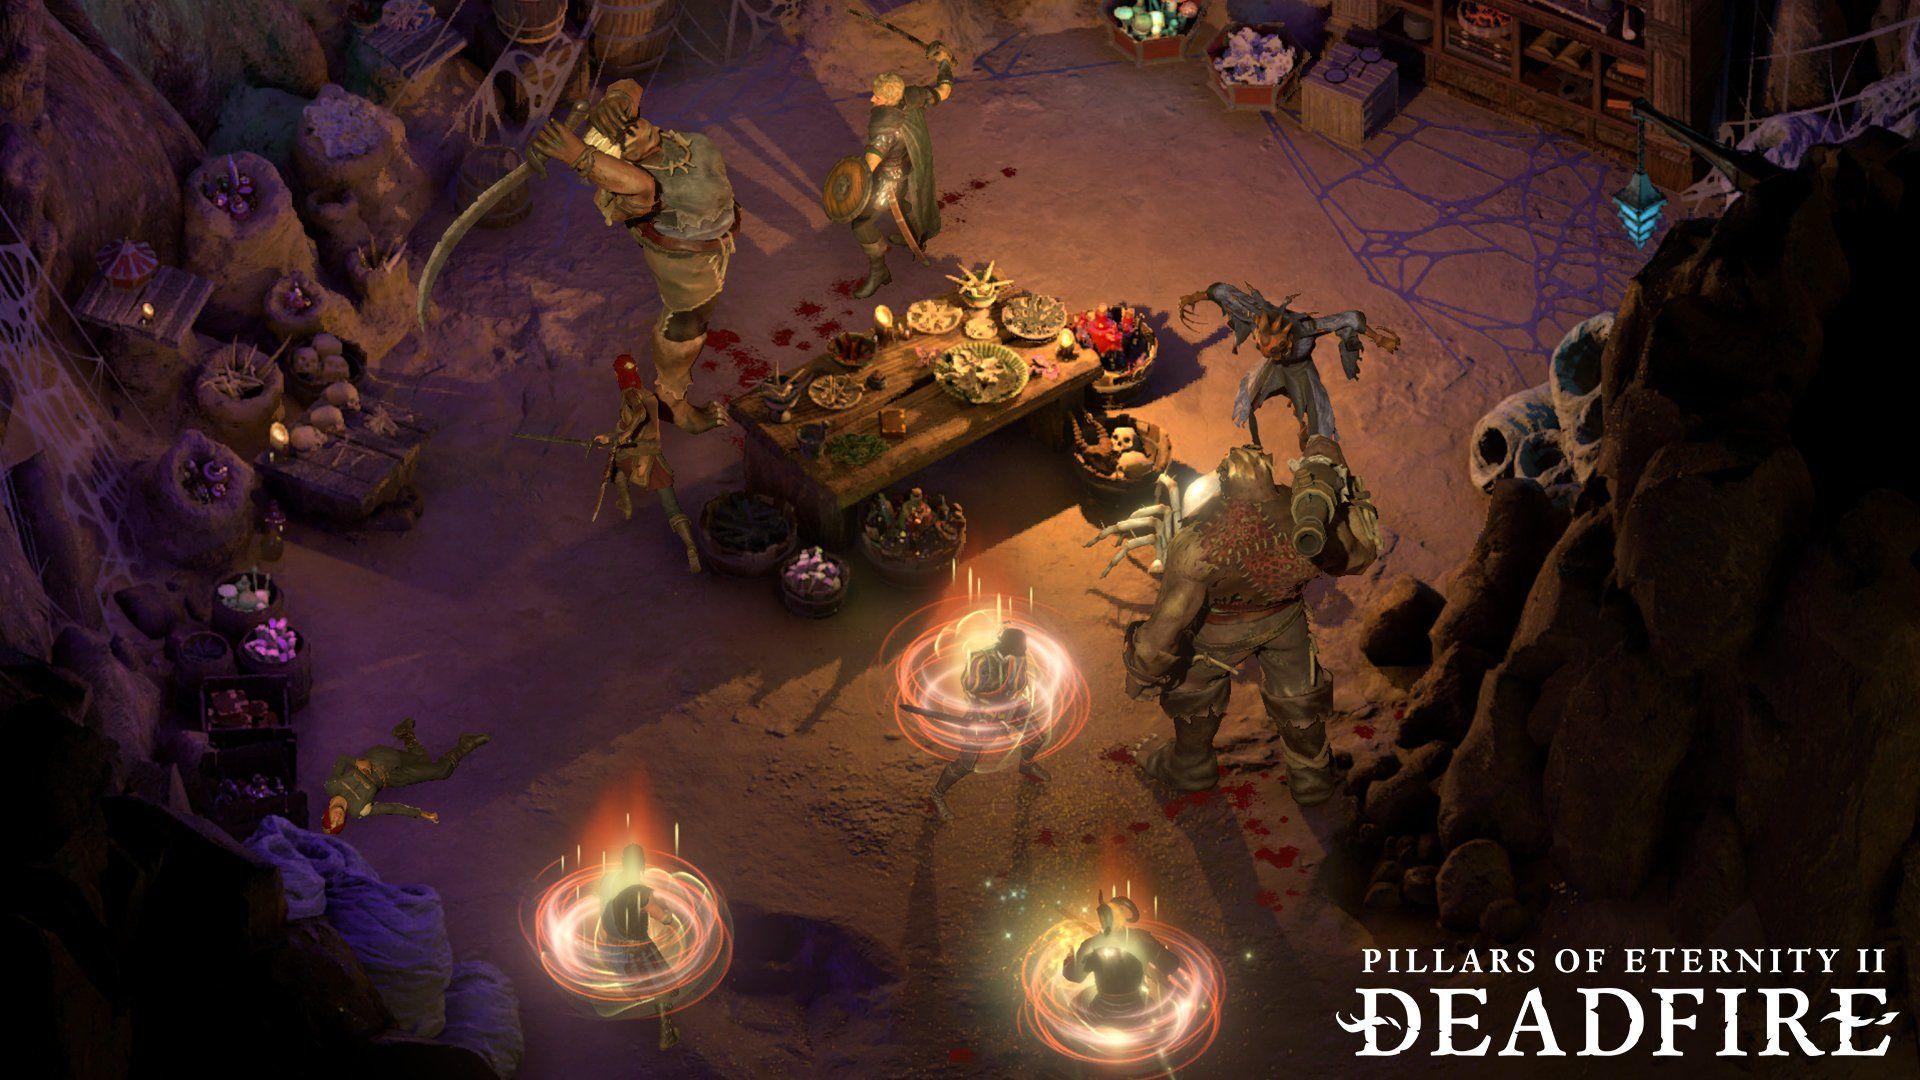 Pillars of Eternity II: Deadfire Full HD Wallpaper and Background